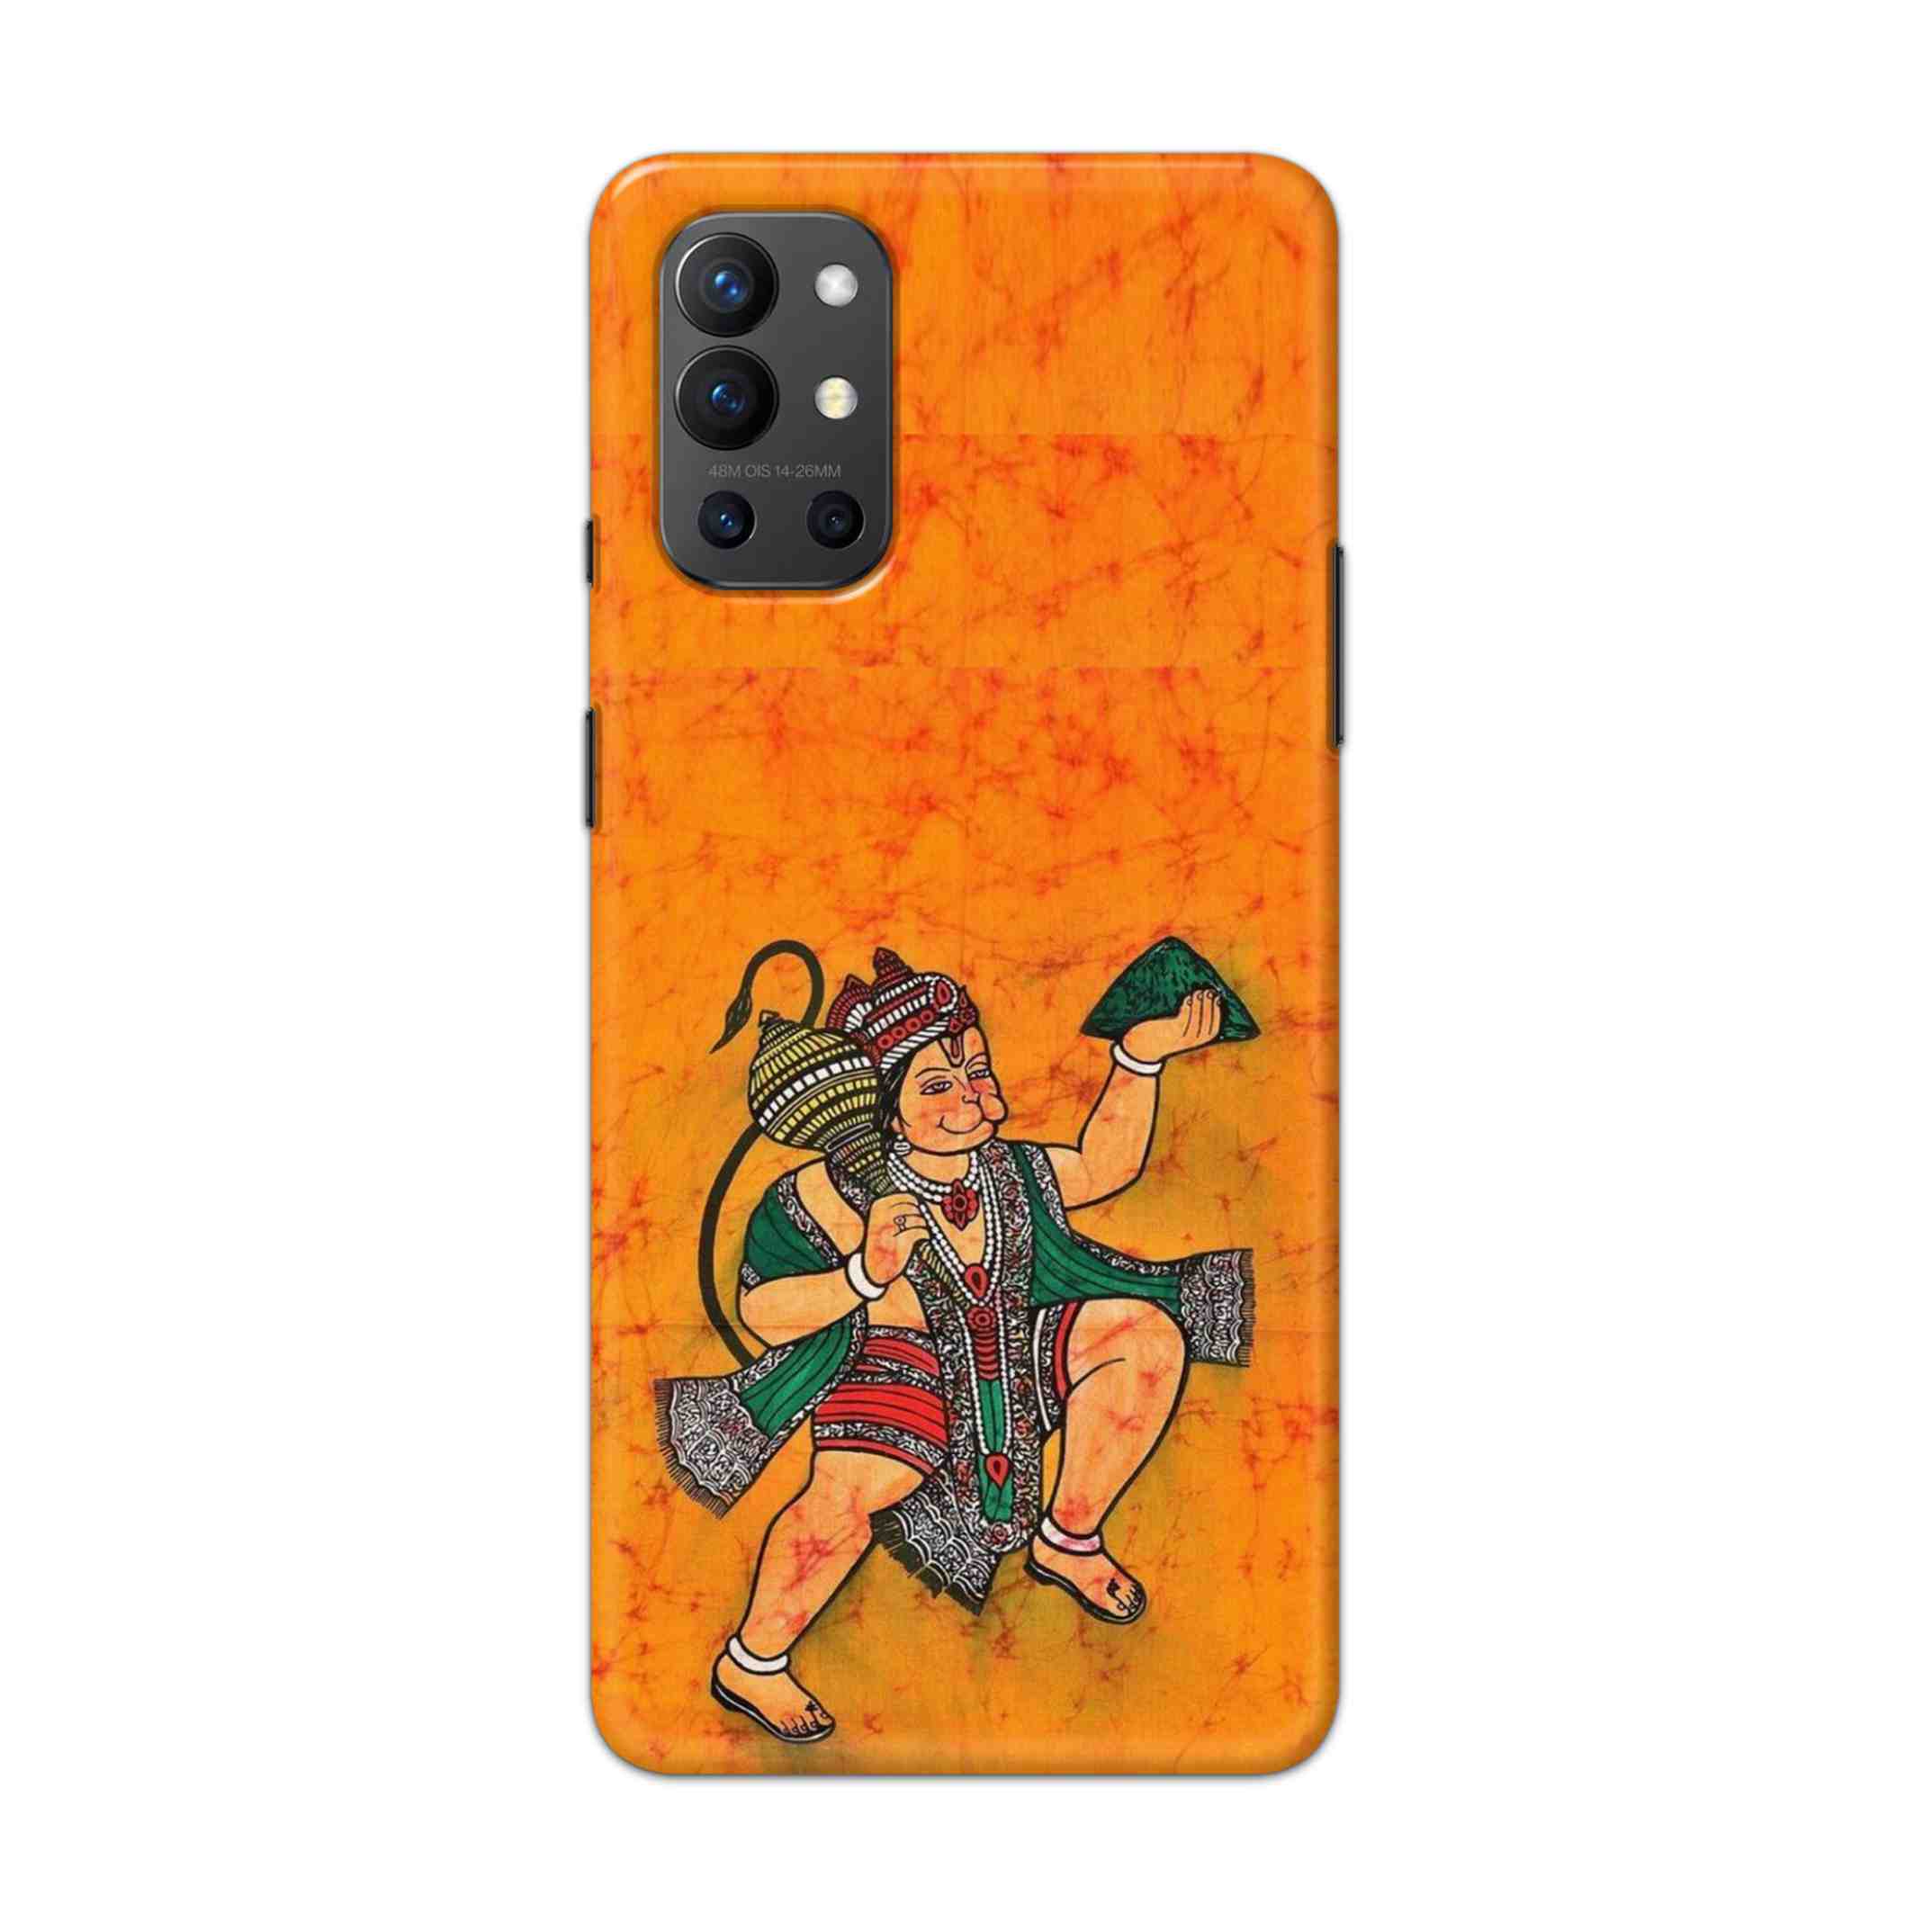 Buy Hanuman Ji Hard Back Mobile Phone Case Cover For OnePlus 9R / 8T Online